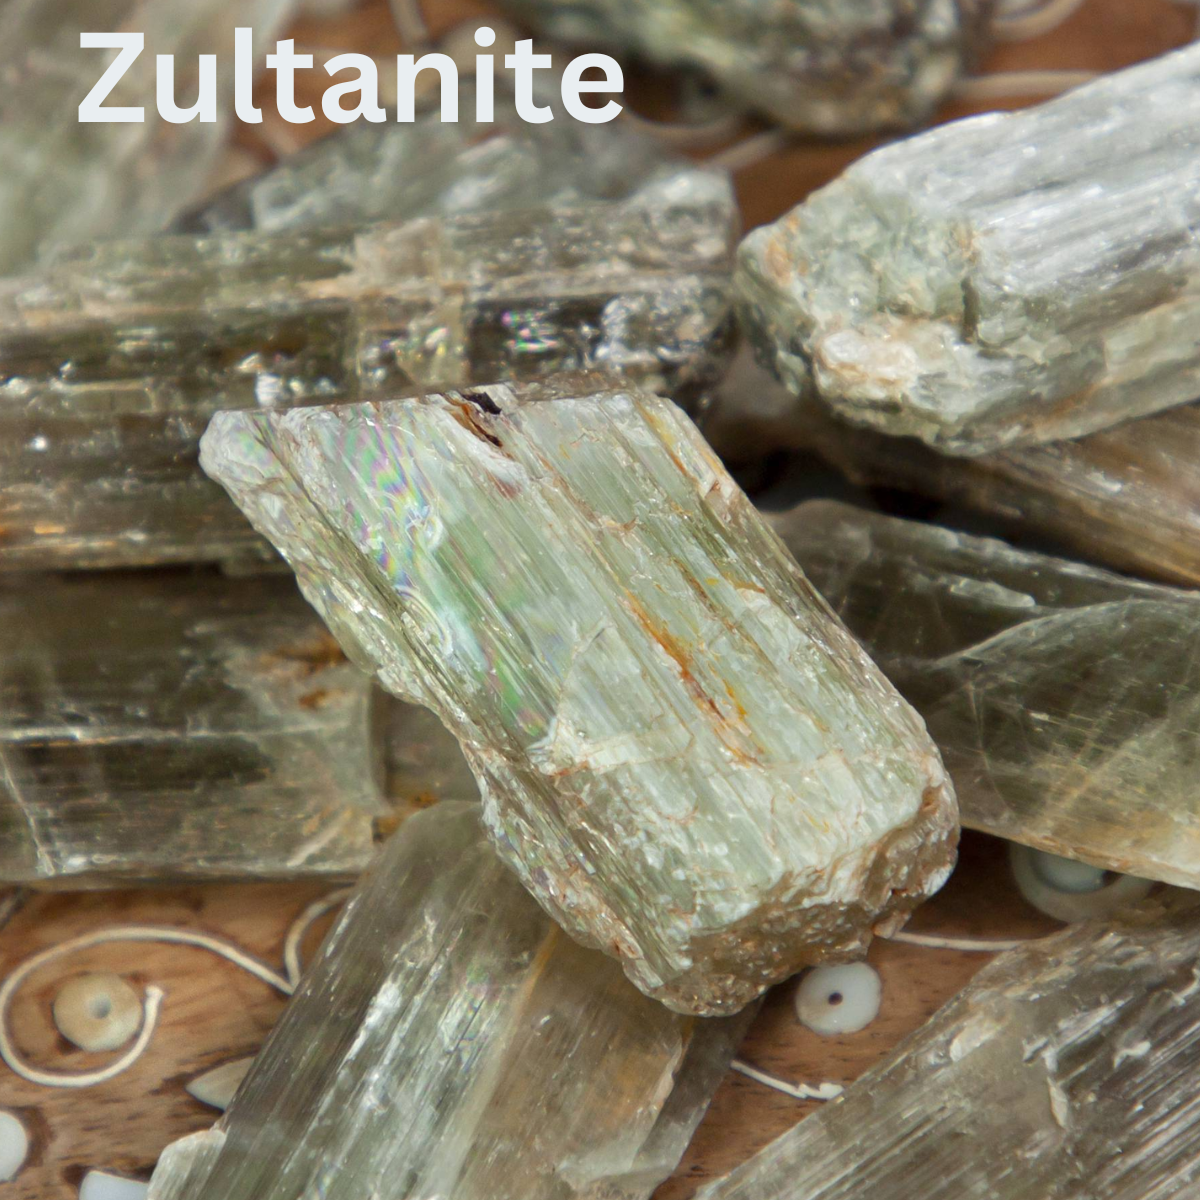 Zultanite | Stone Information, Healing Properties, Uses